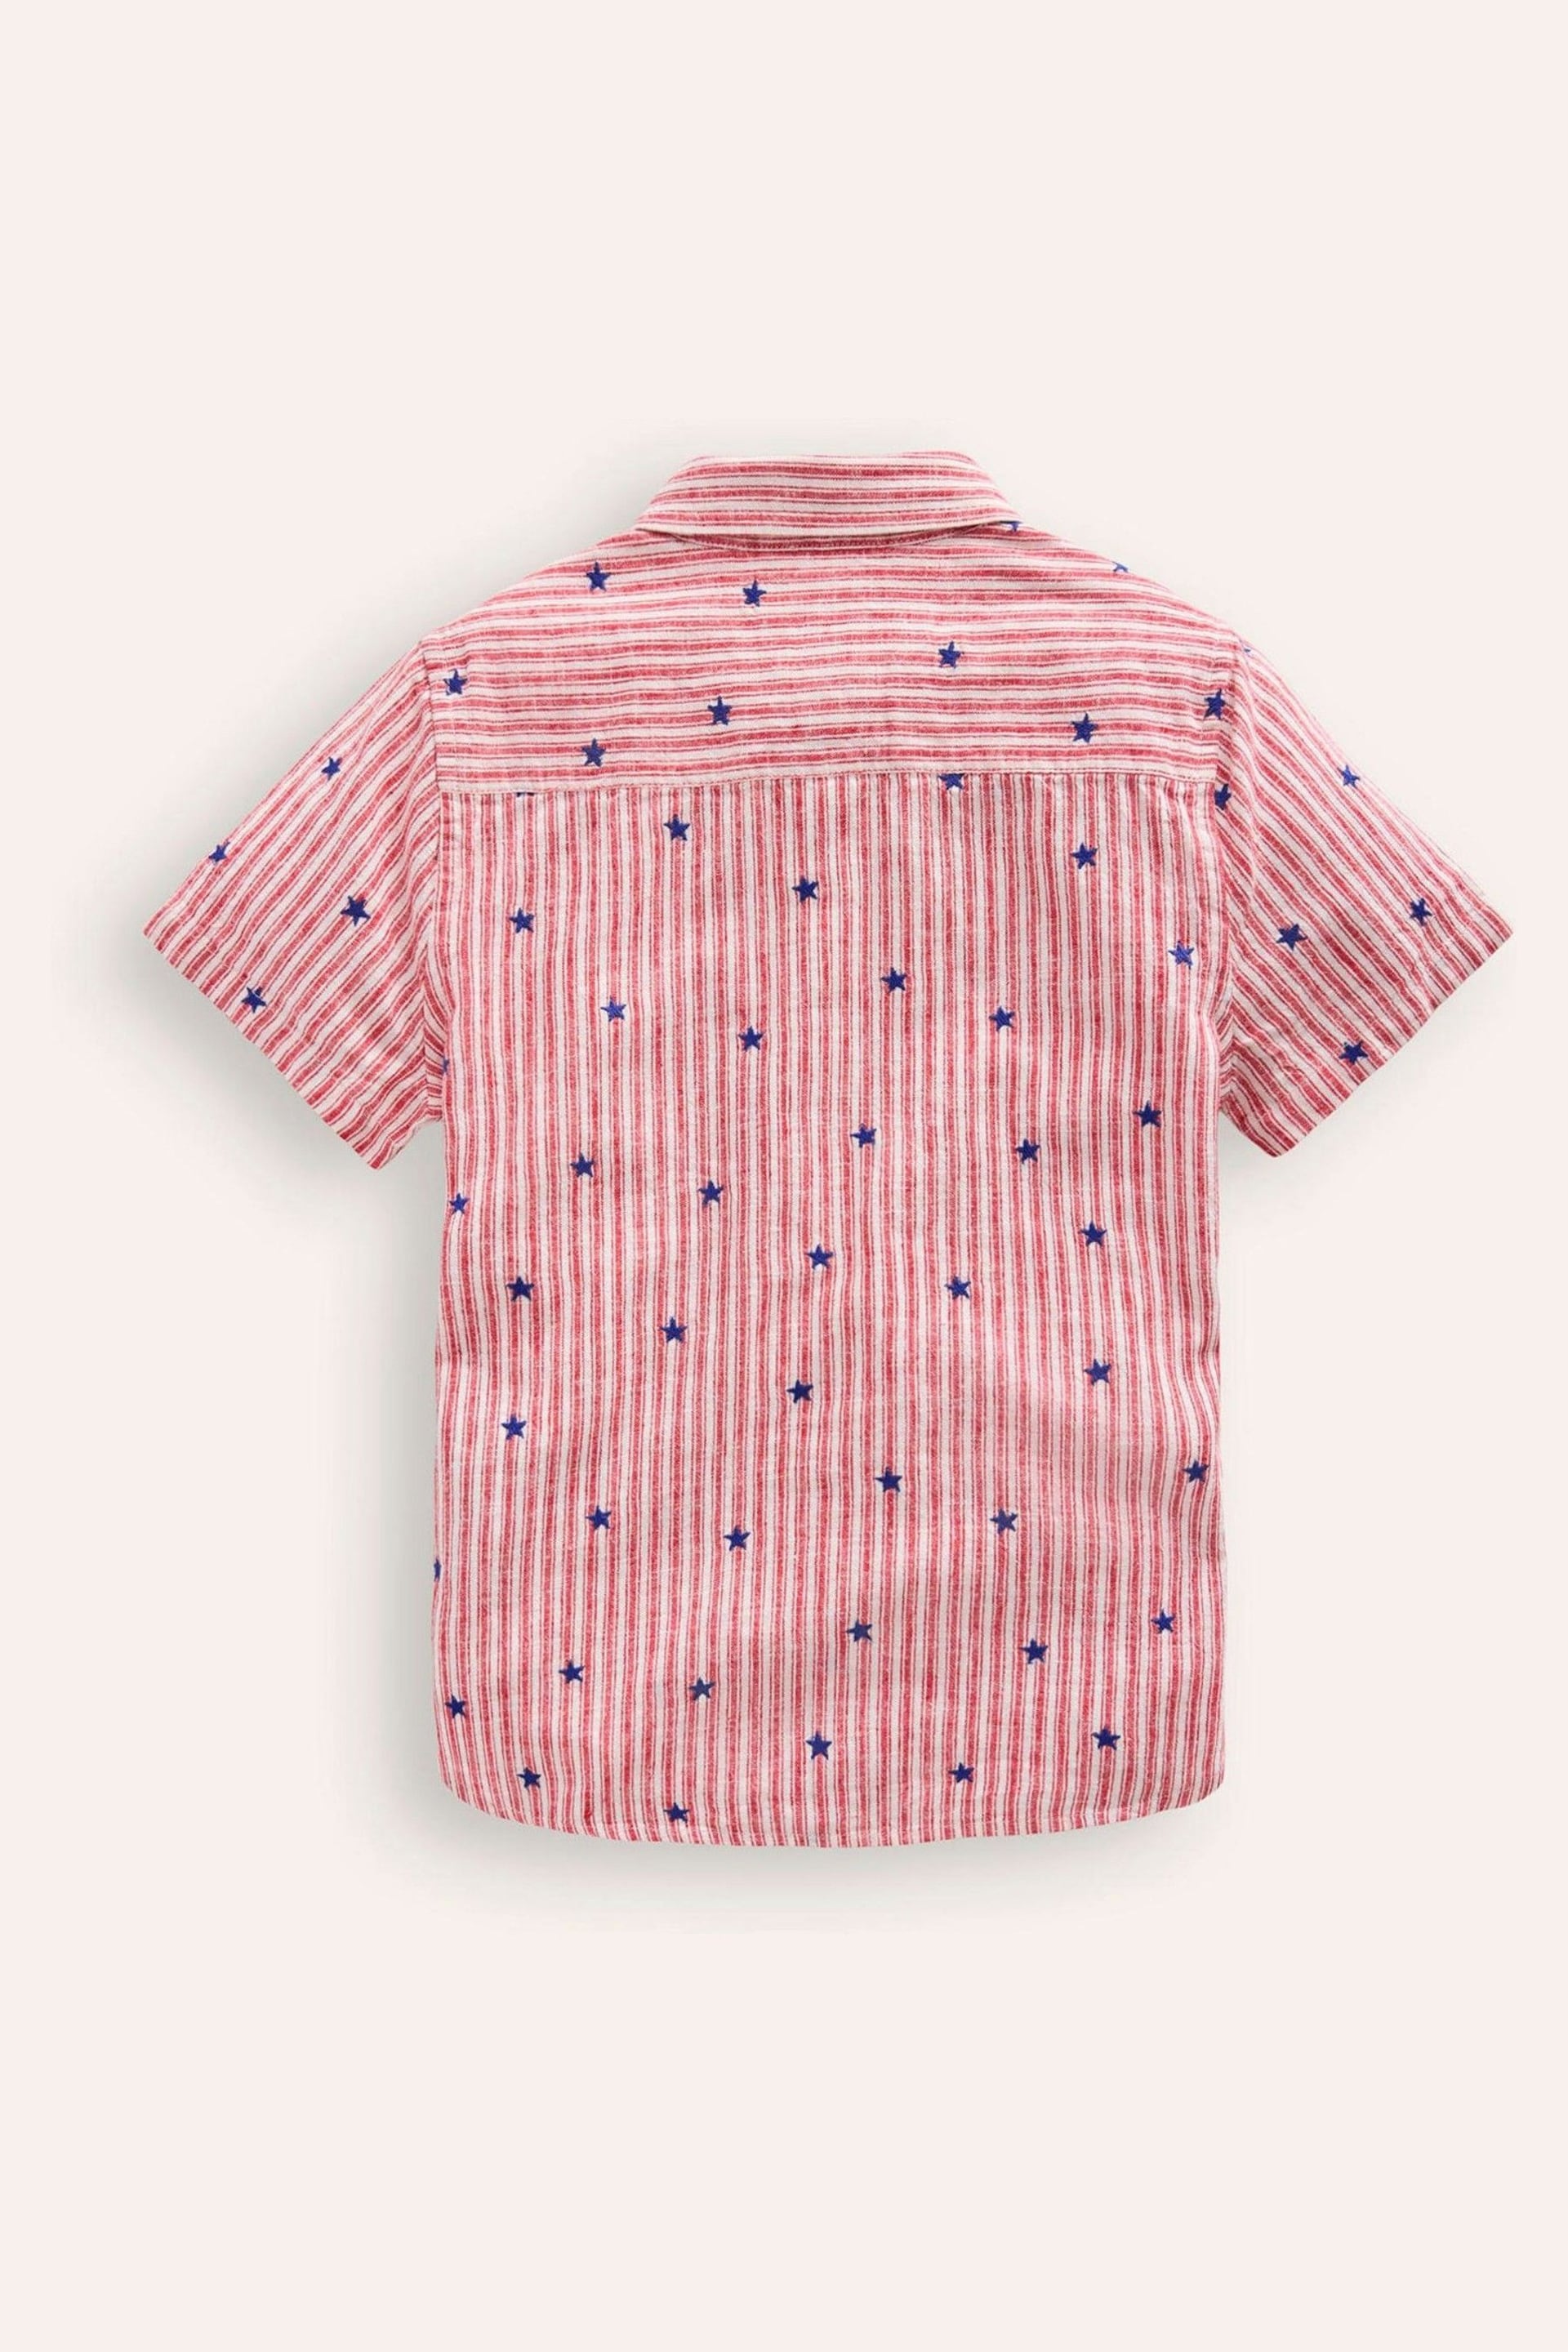 Boden Red Stripe Star Cotton Linen Shirt - Image 2 of 3